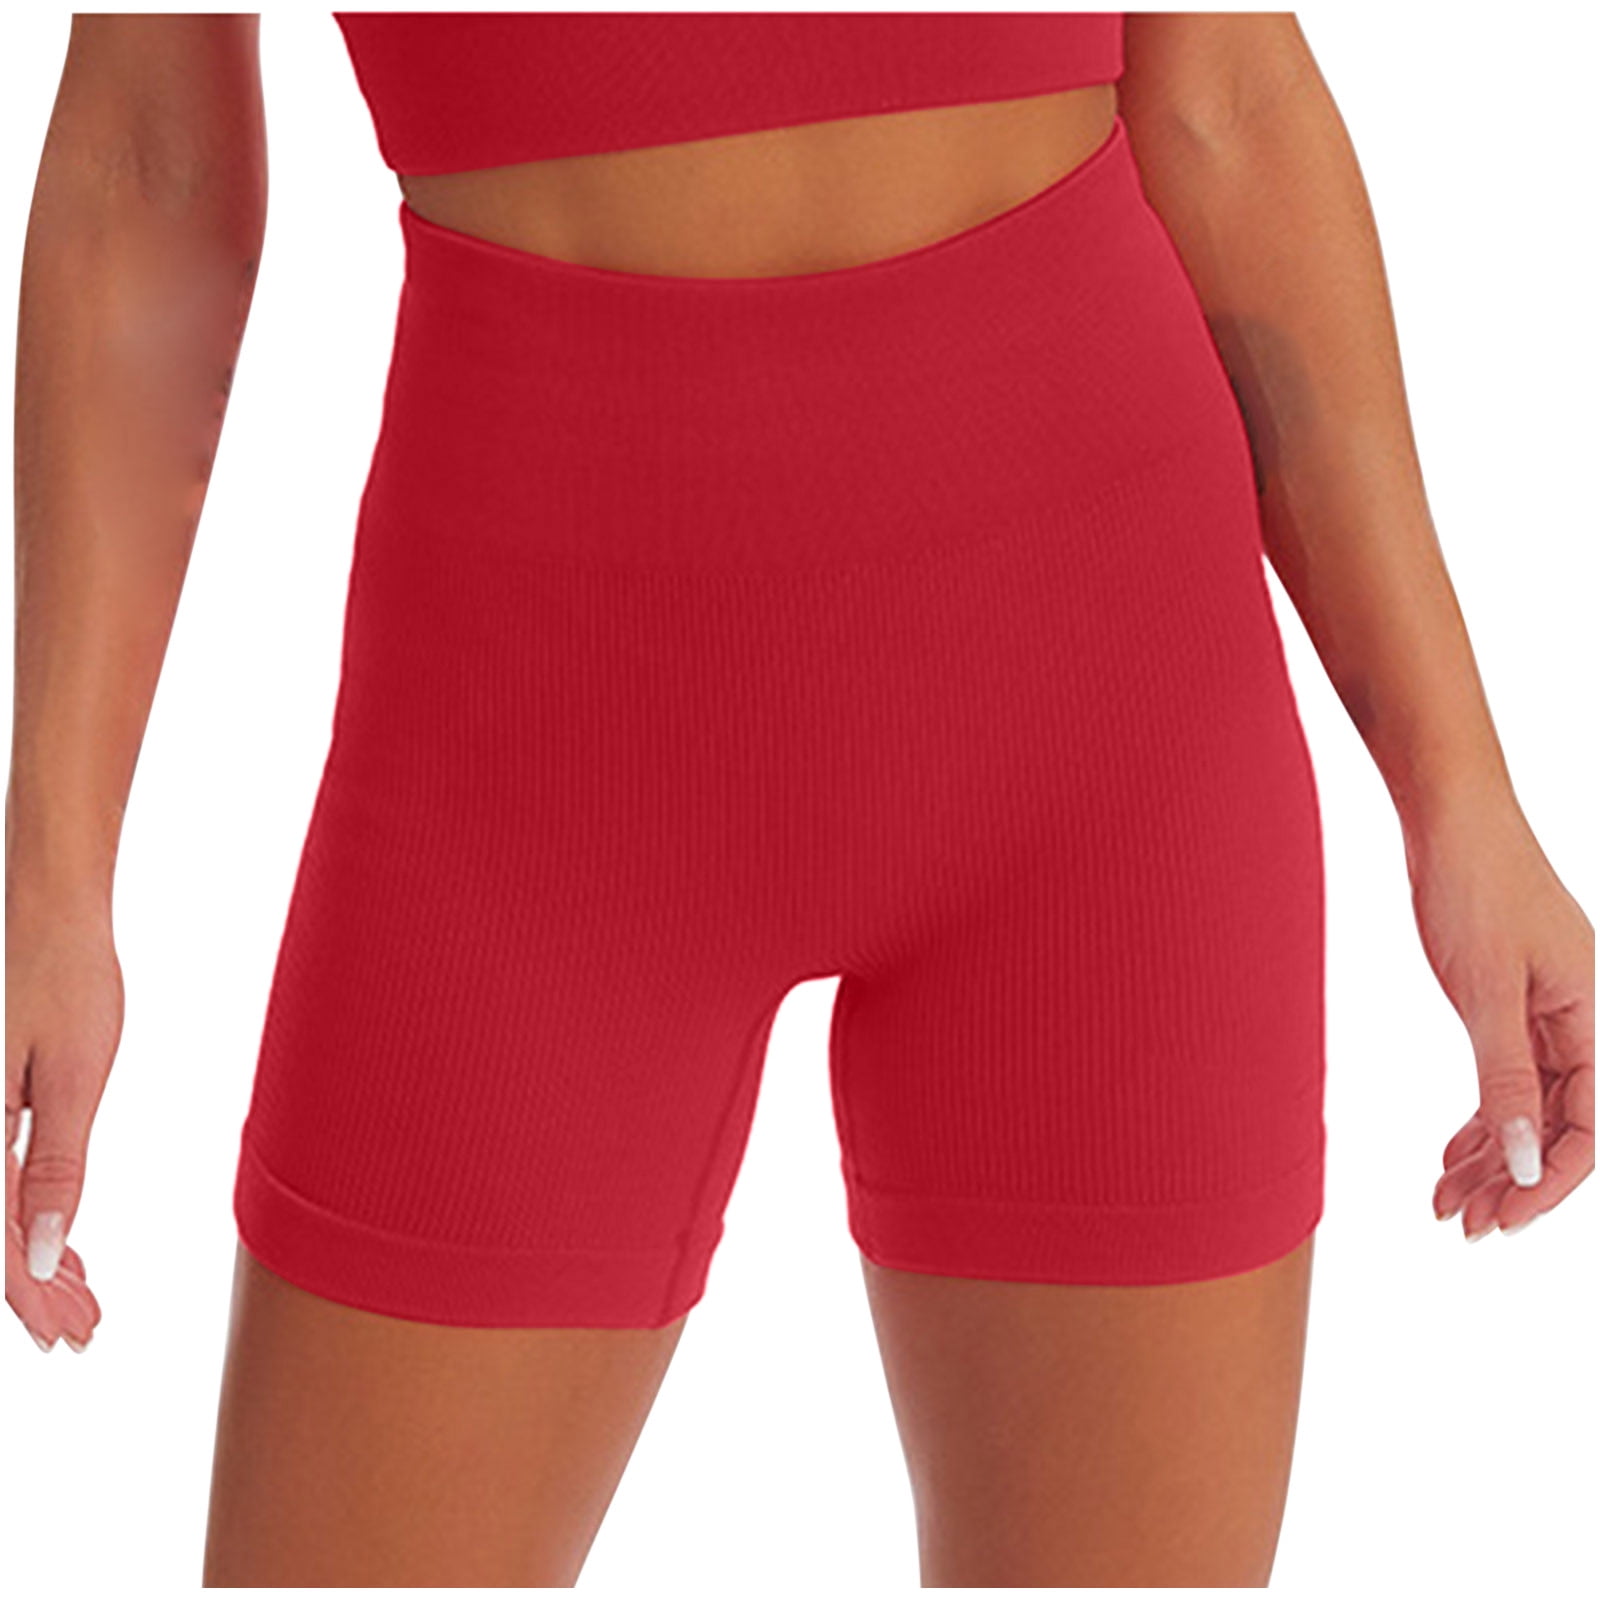 Mondetta leggings, Size Medium  Gym shorts womens, Clothes design, Leggings